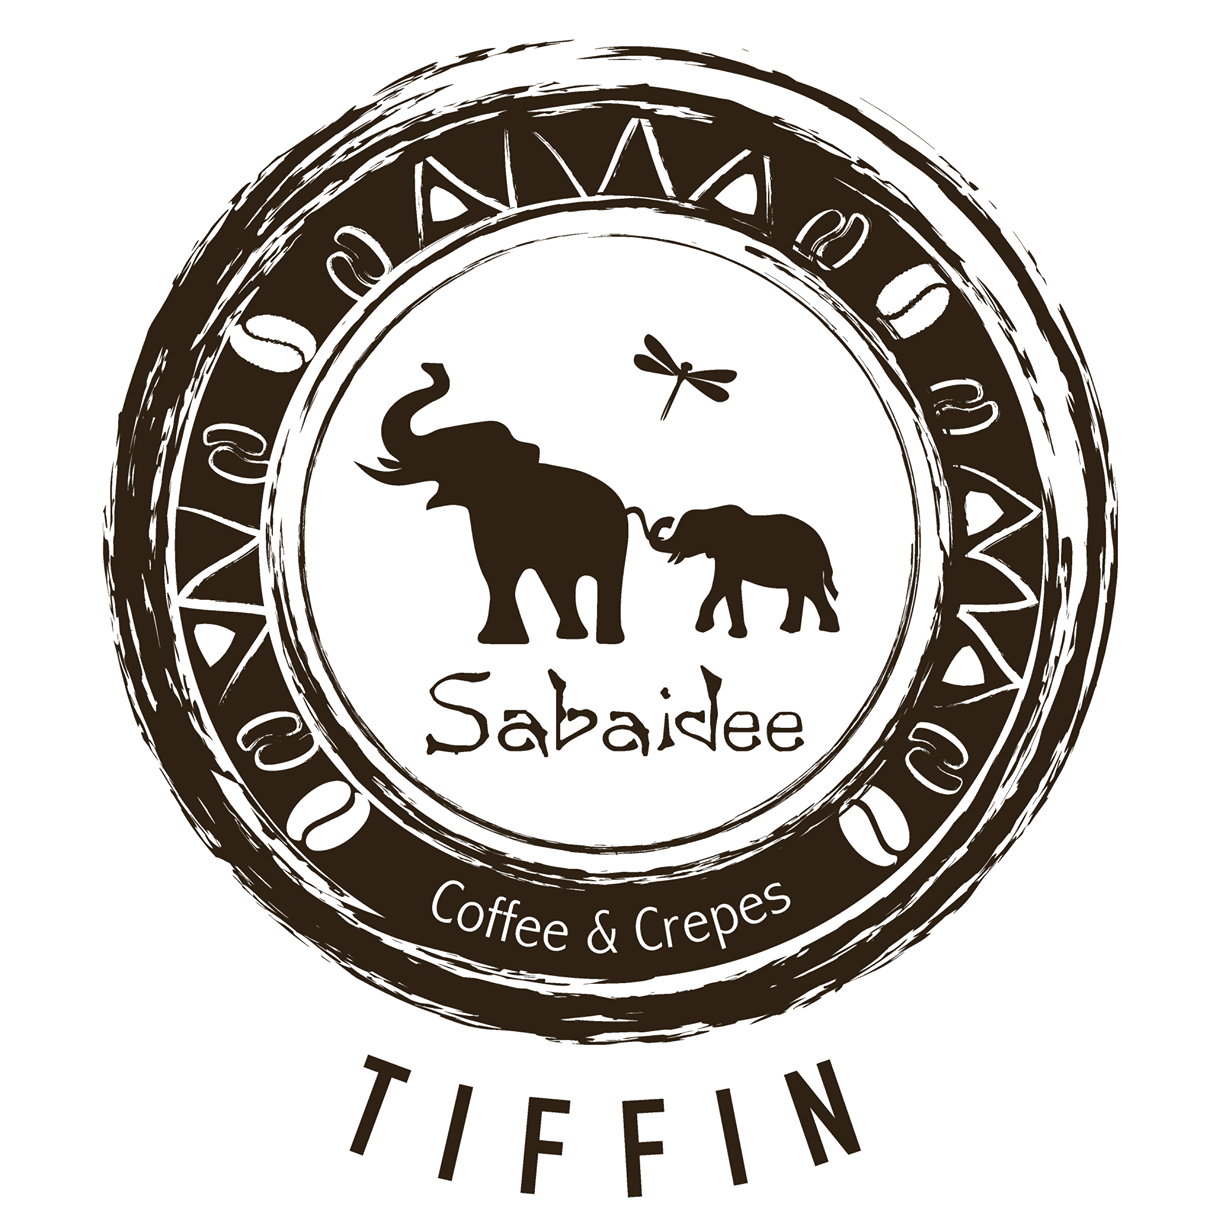 Sabaidee Coffee & Crepes in Tiffin, Ohio logo